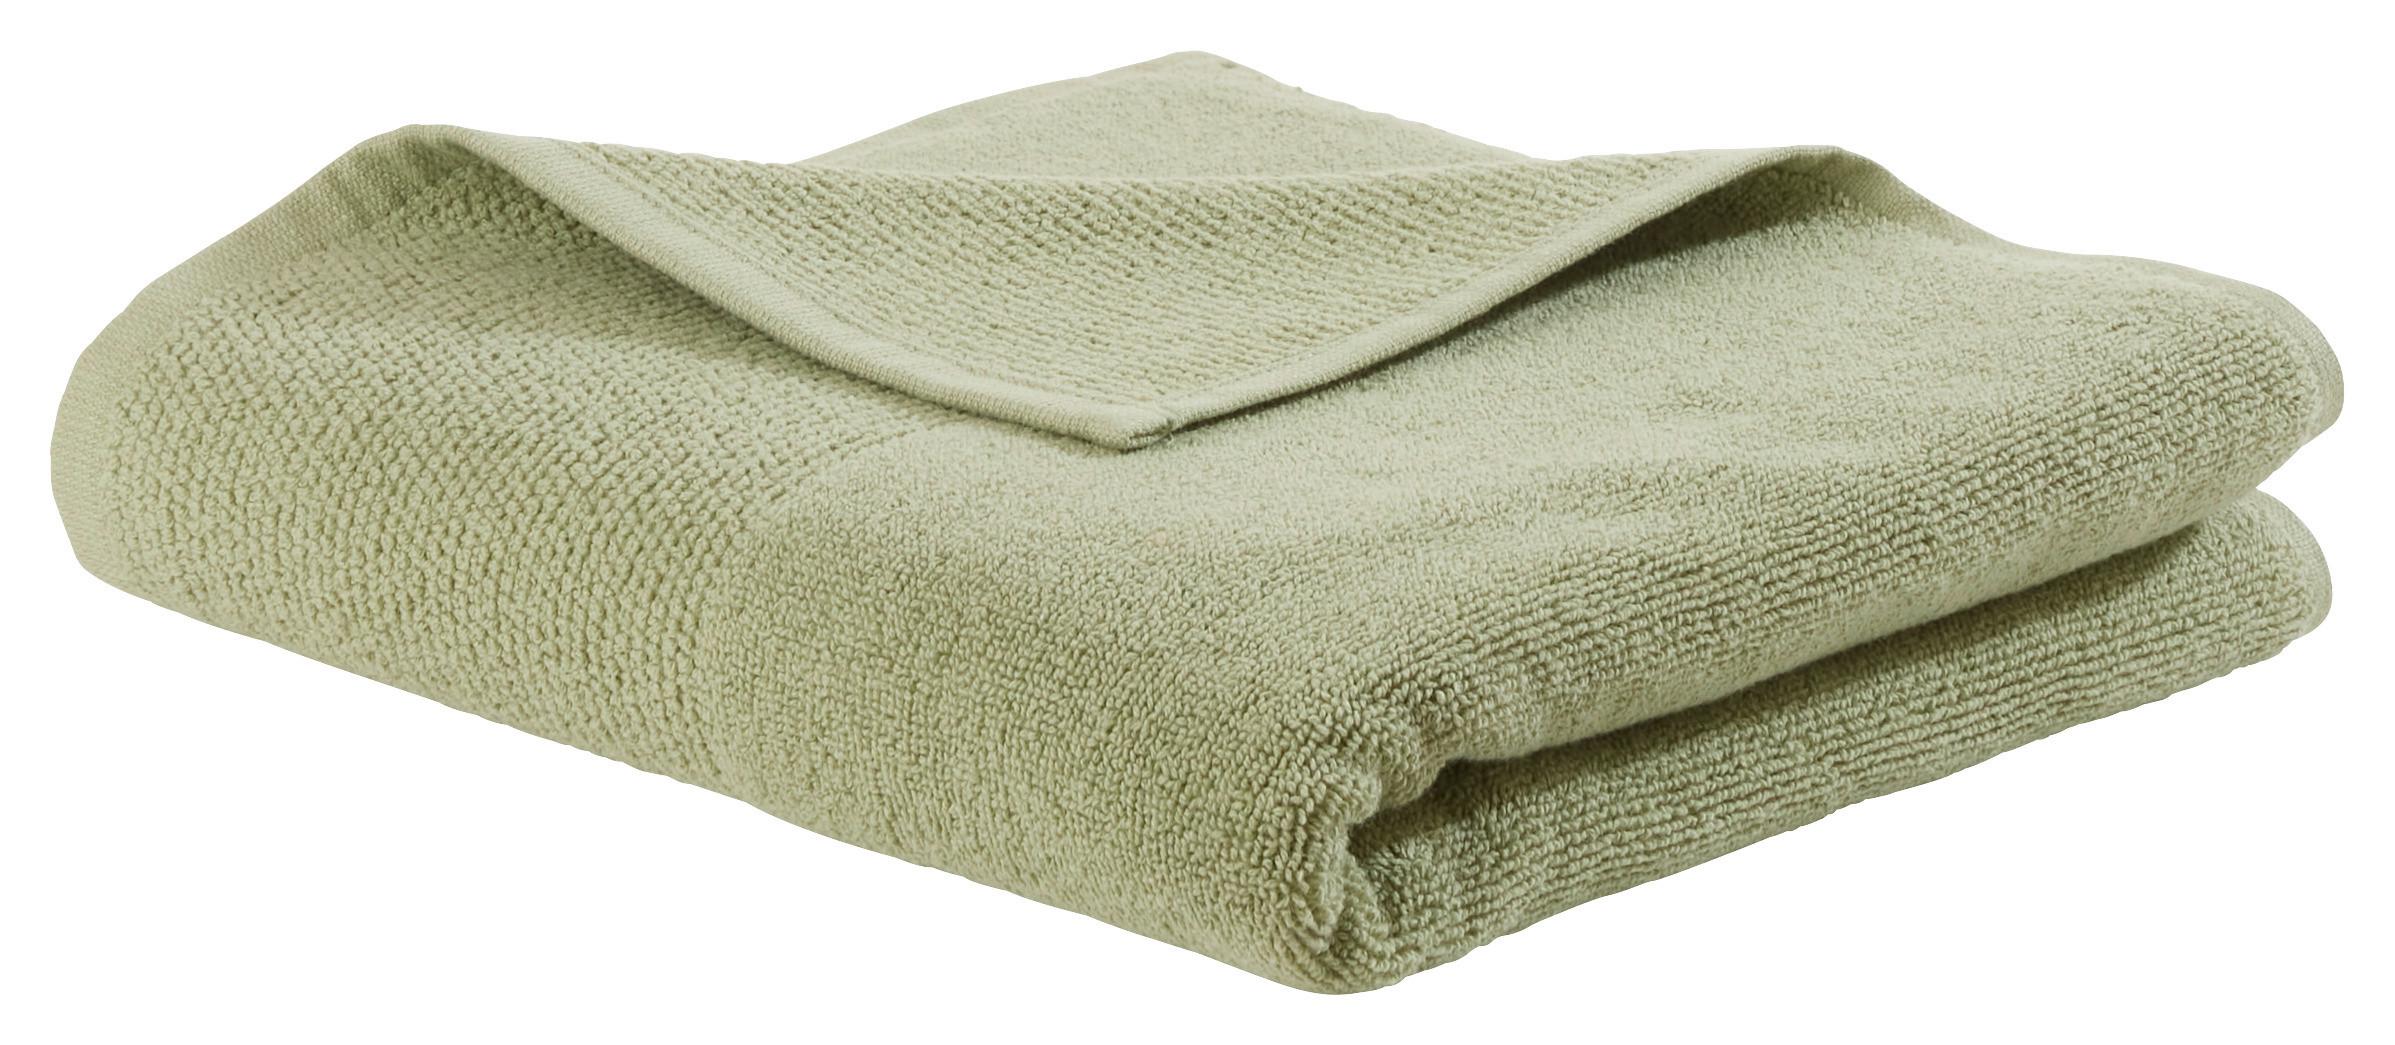 Brisača Olivia - svetlo zelena, Konvencionalno, tekstil (50/100cm) - Premium Living